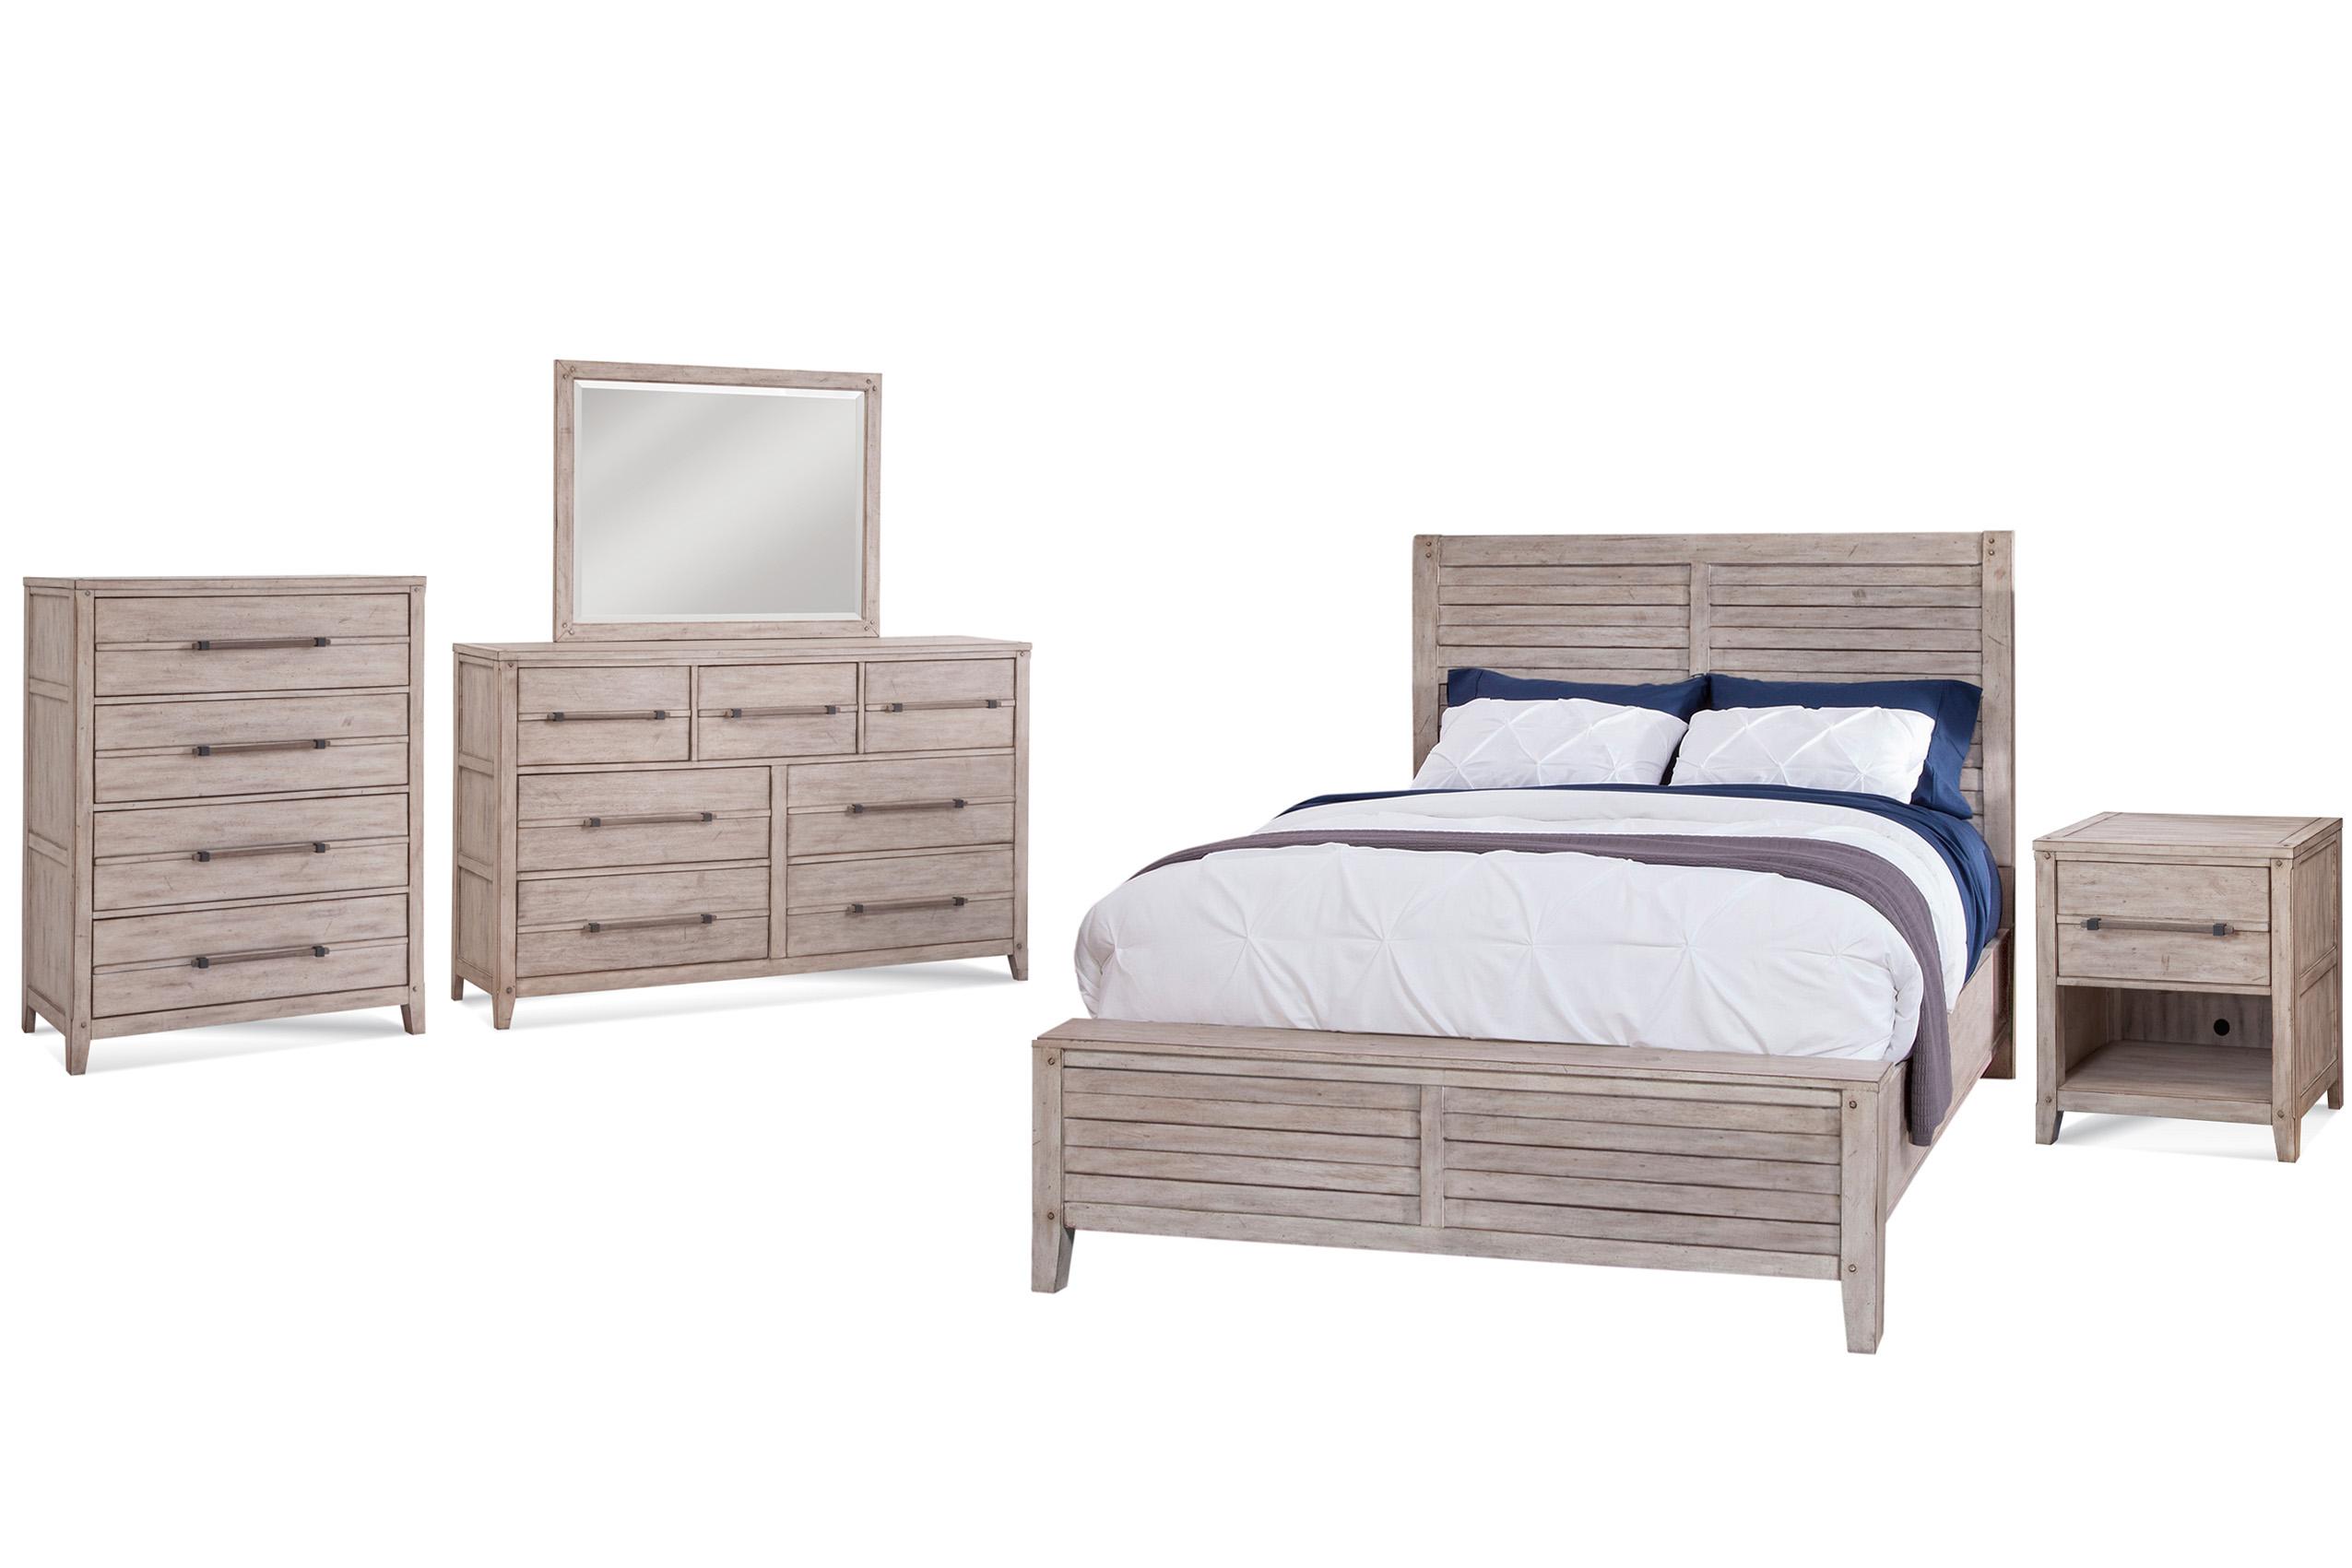 Classic, Traditional Panel Bedroom Set AURORA 2810-50PAN 2810-QPNPN-5PC in whitewash 